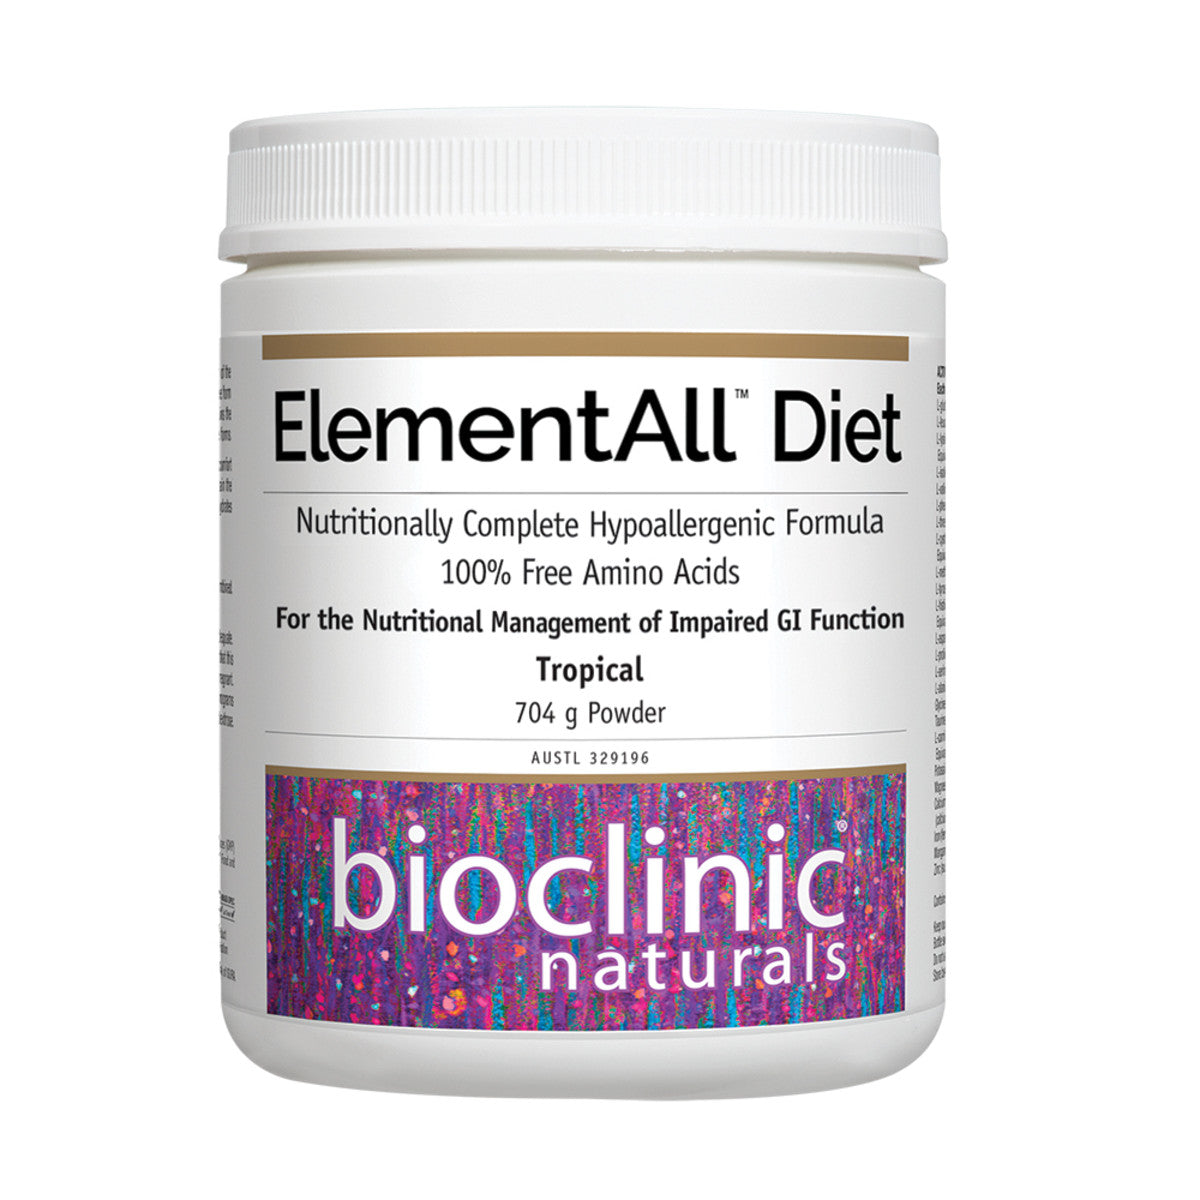 Bioclinic Naturals - ElementAll Diet Tropical